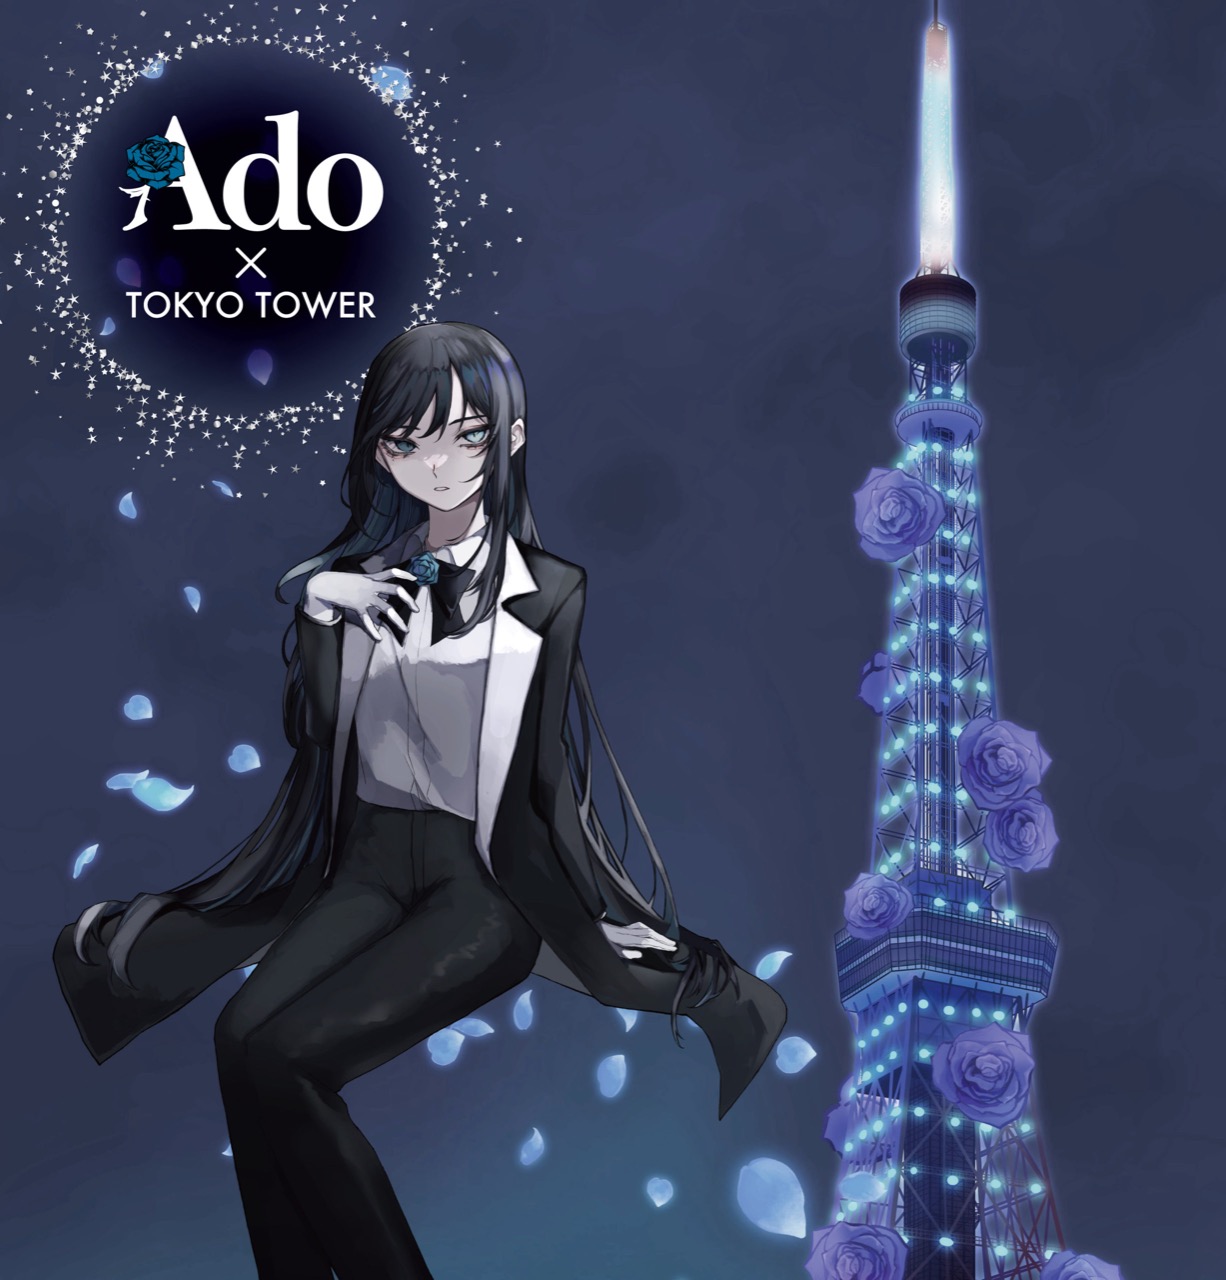 Ado (アド) メジャーデビュー2周年記念 in 東京タワー 11月25日より開催!